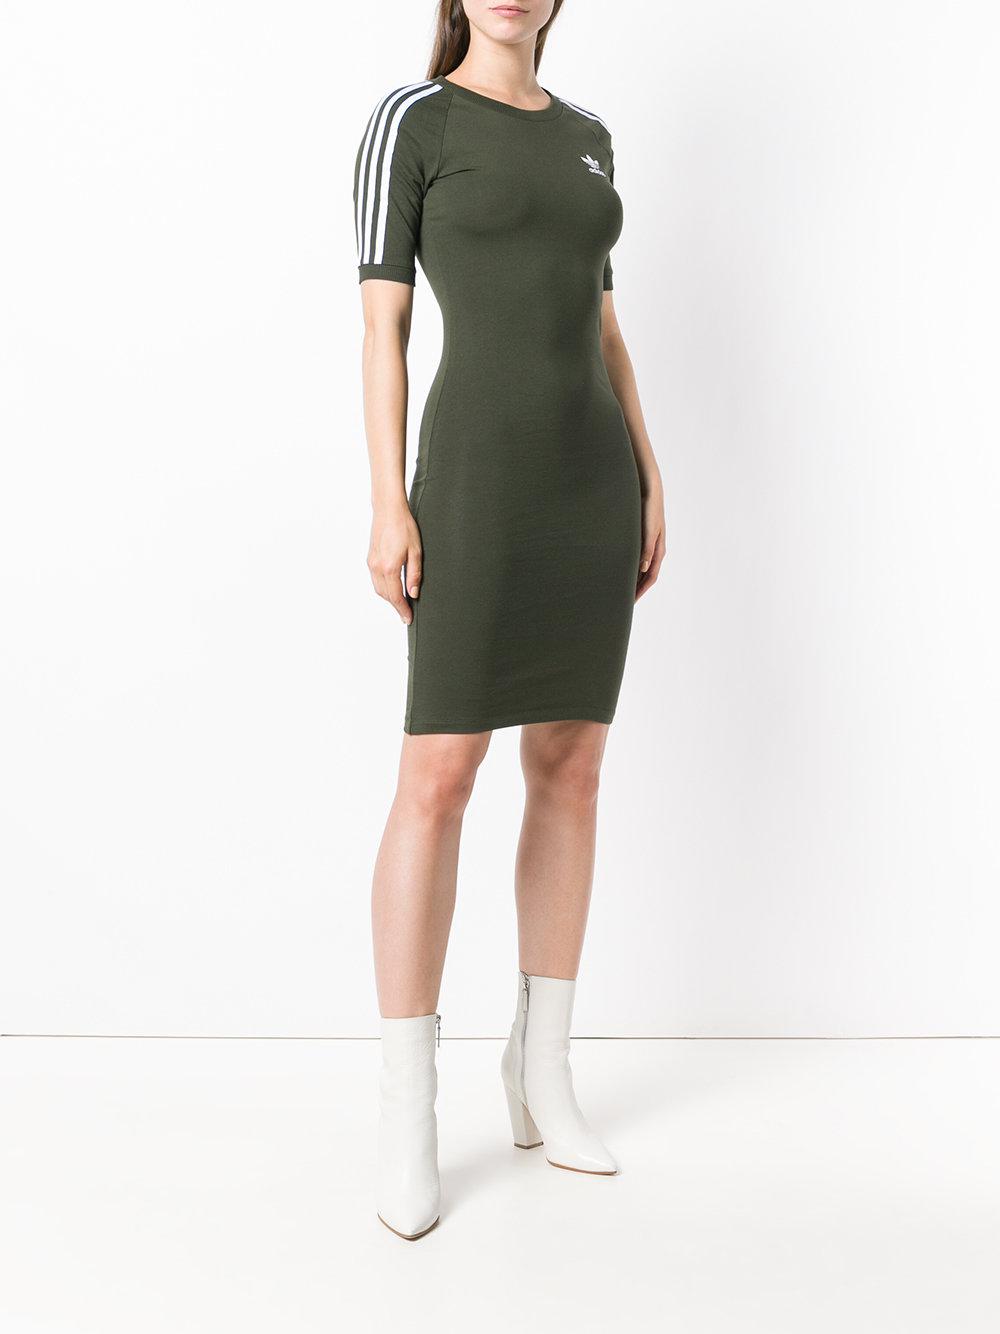 adidas Cotton Originals 3-stripes Dress in Green | Lyst